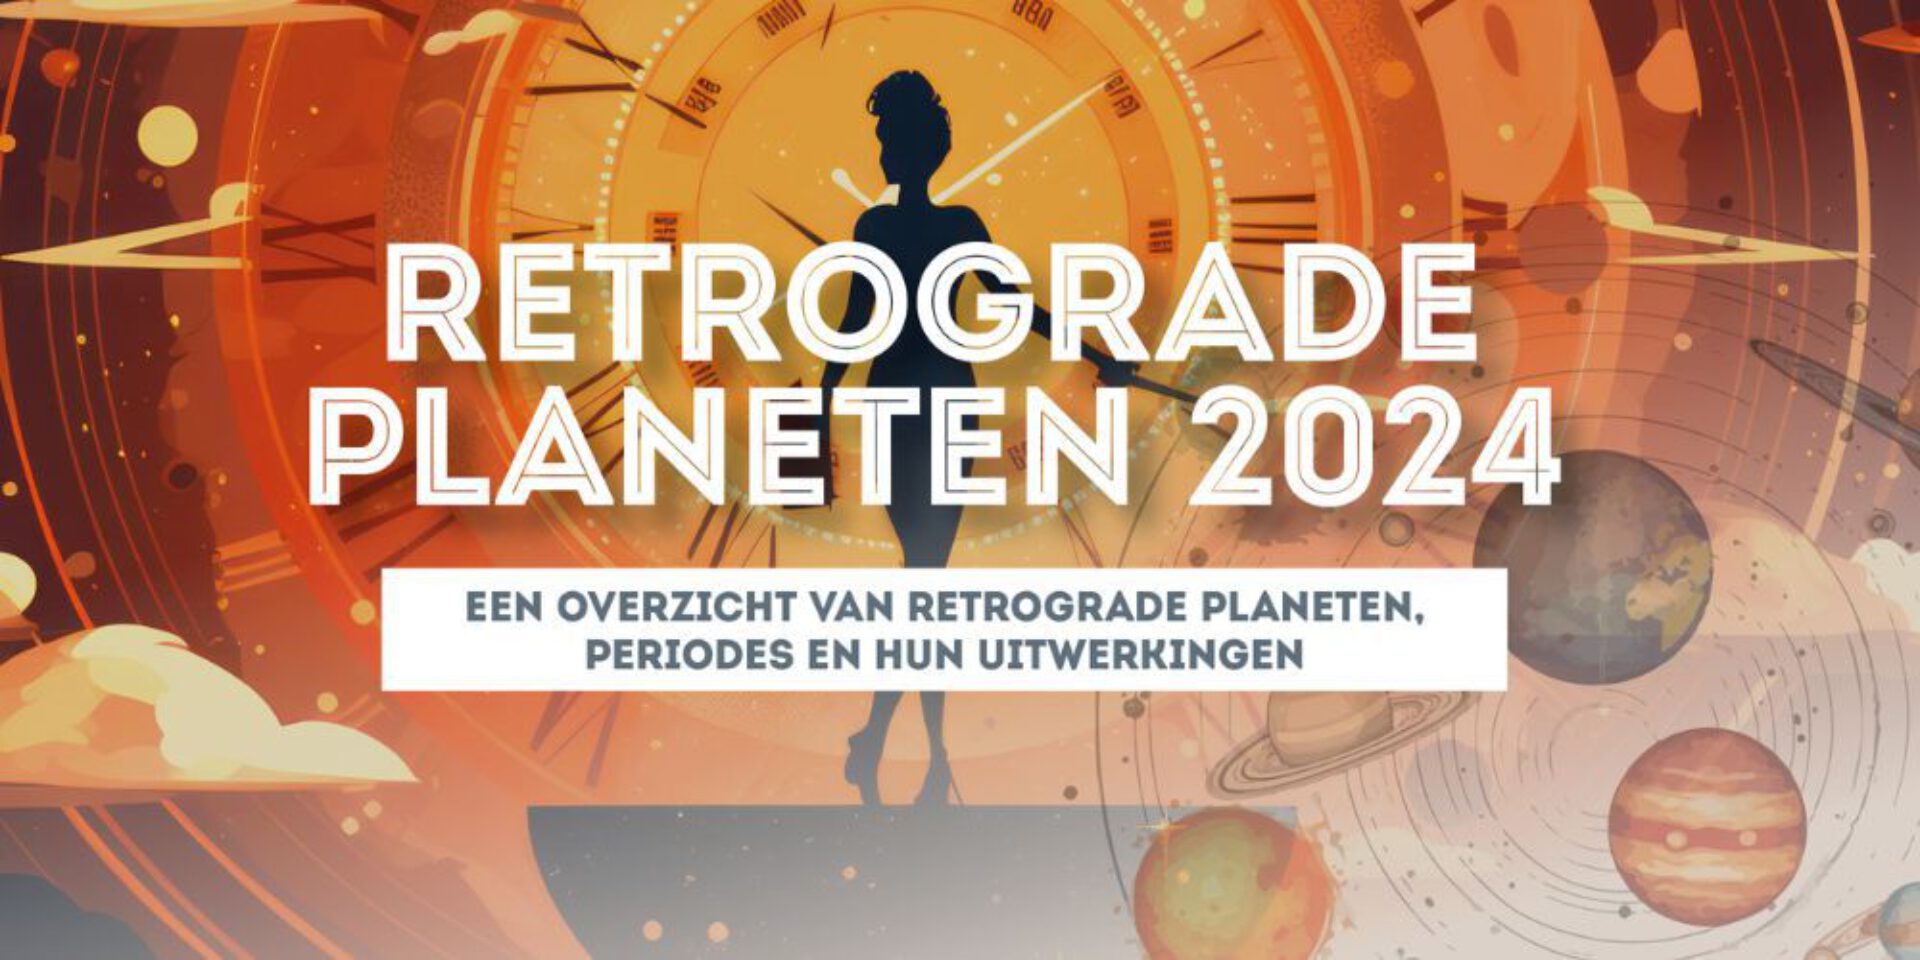 Retrograde planeten 2024